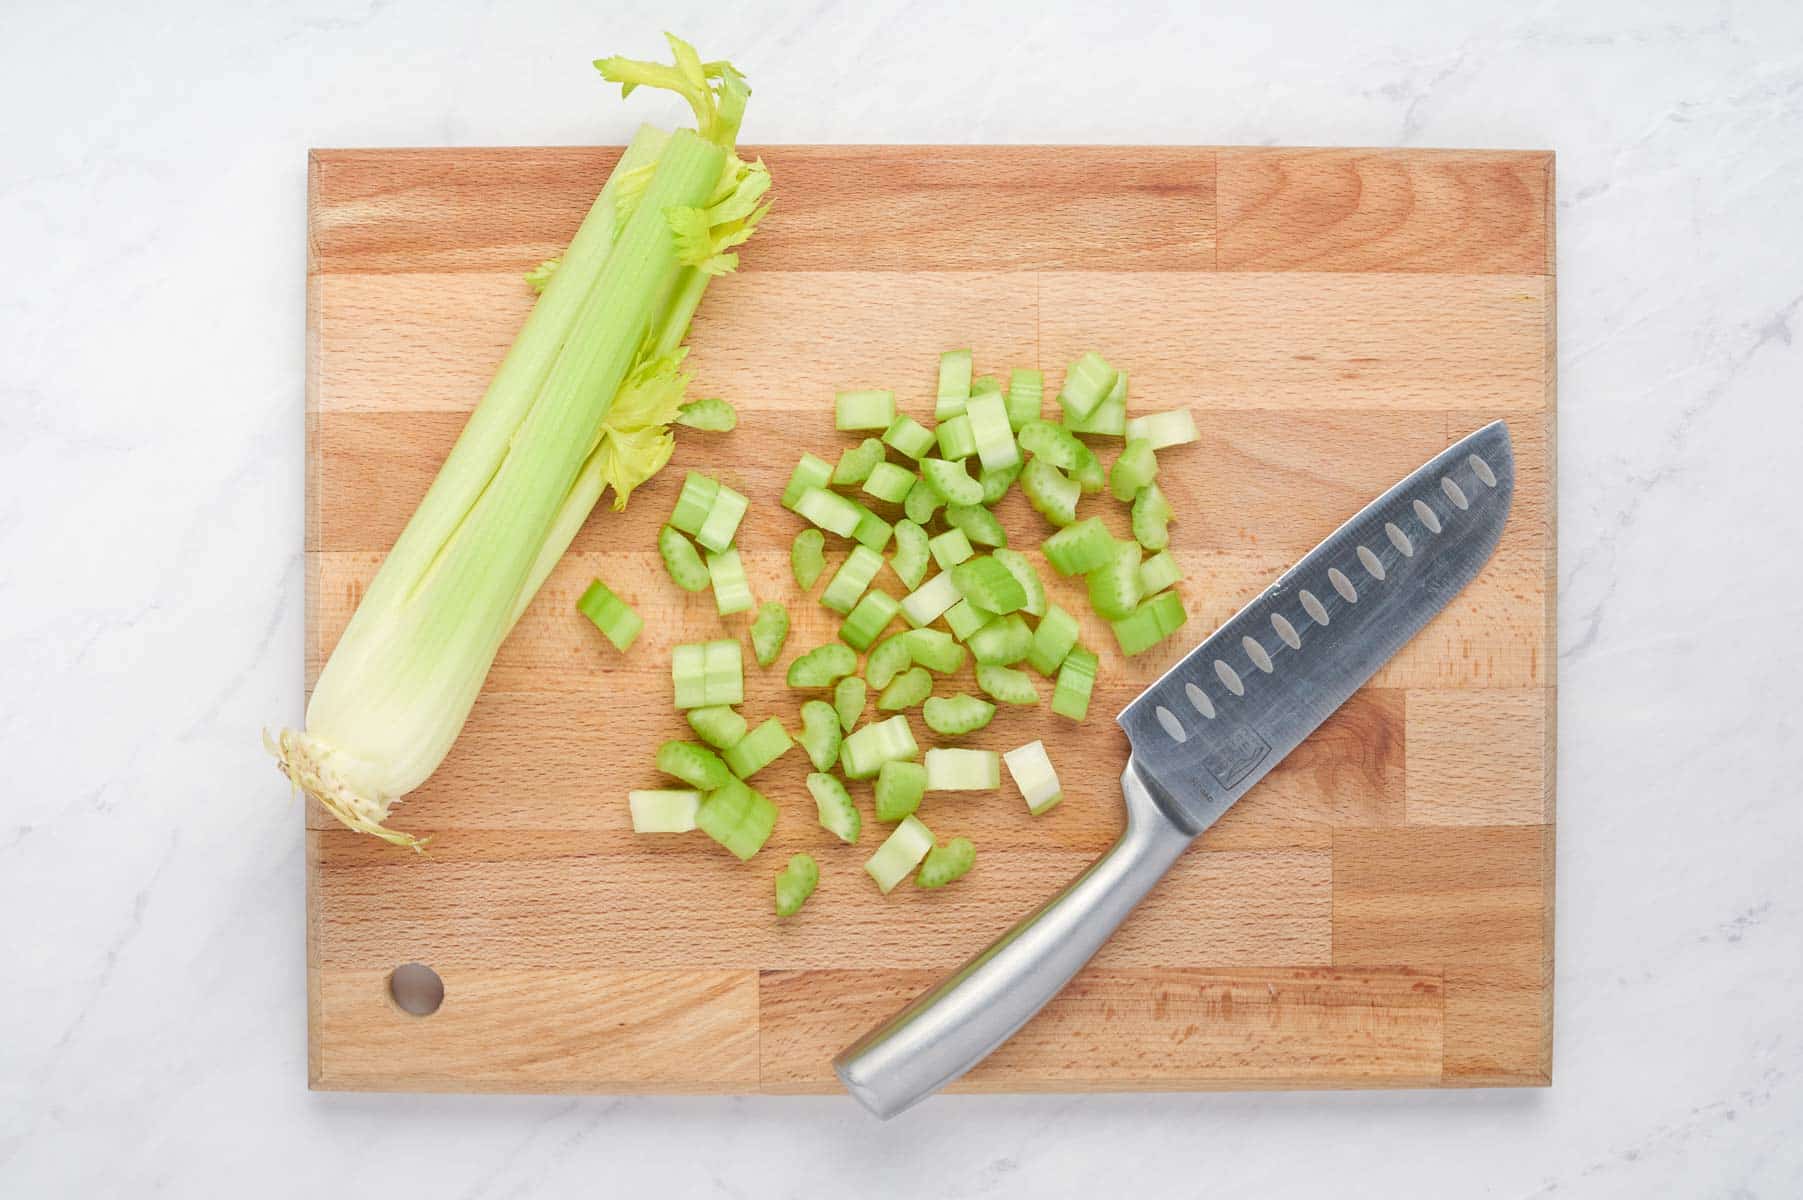 Celery is chopped on a cutting board.